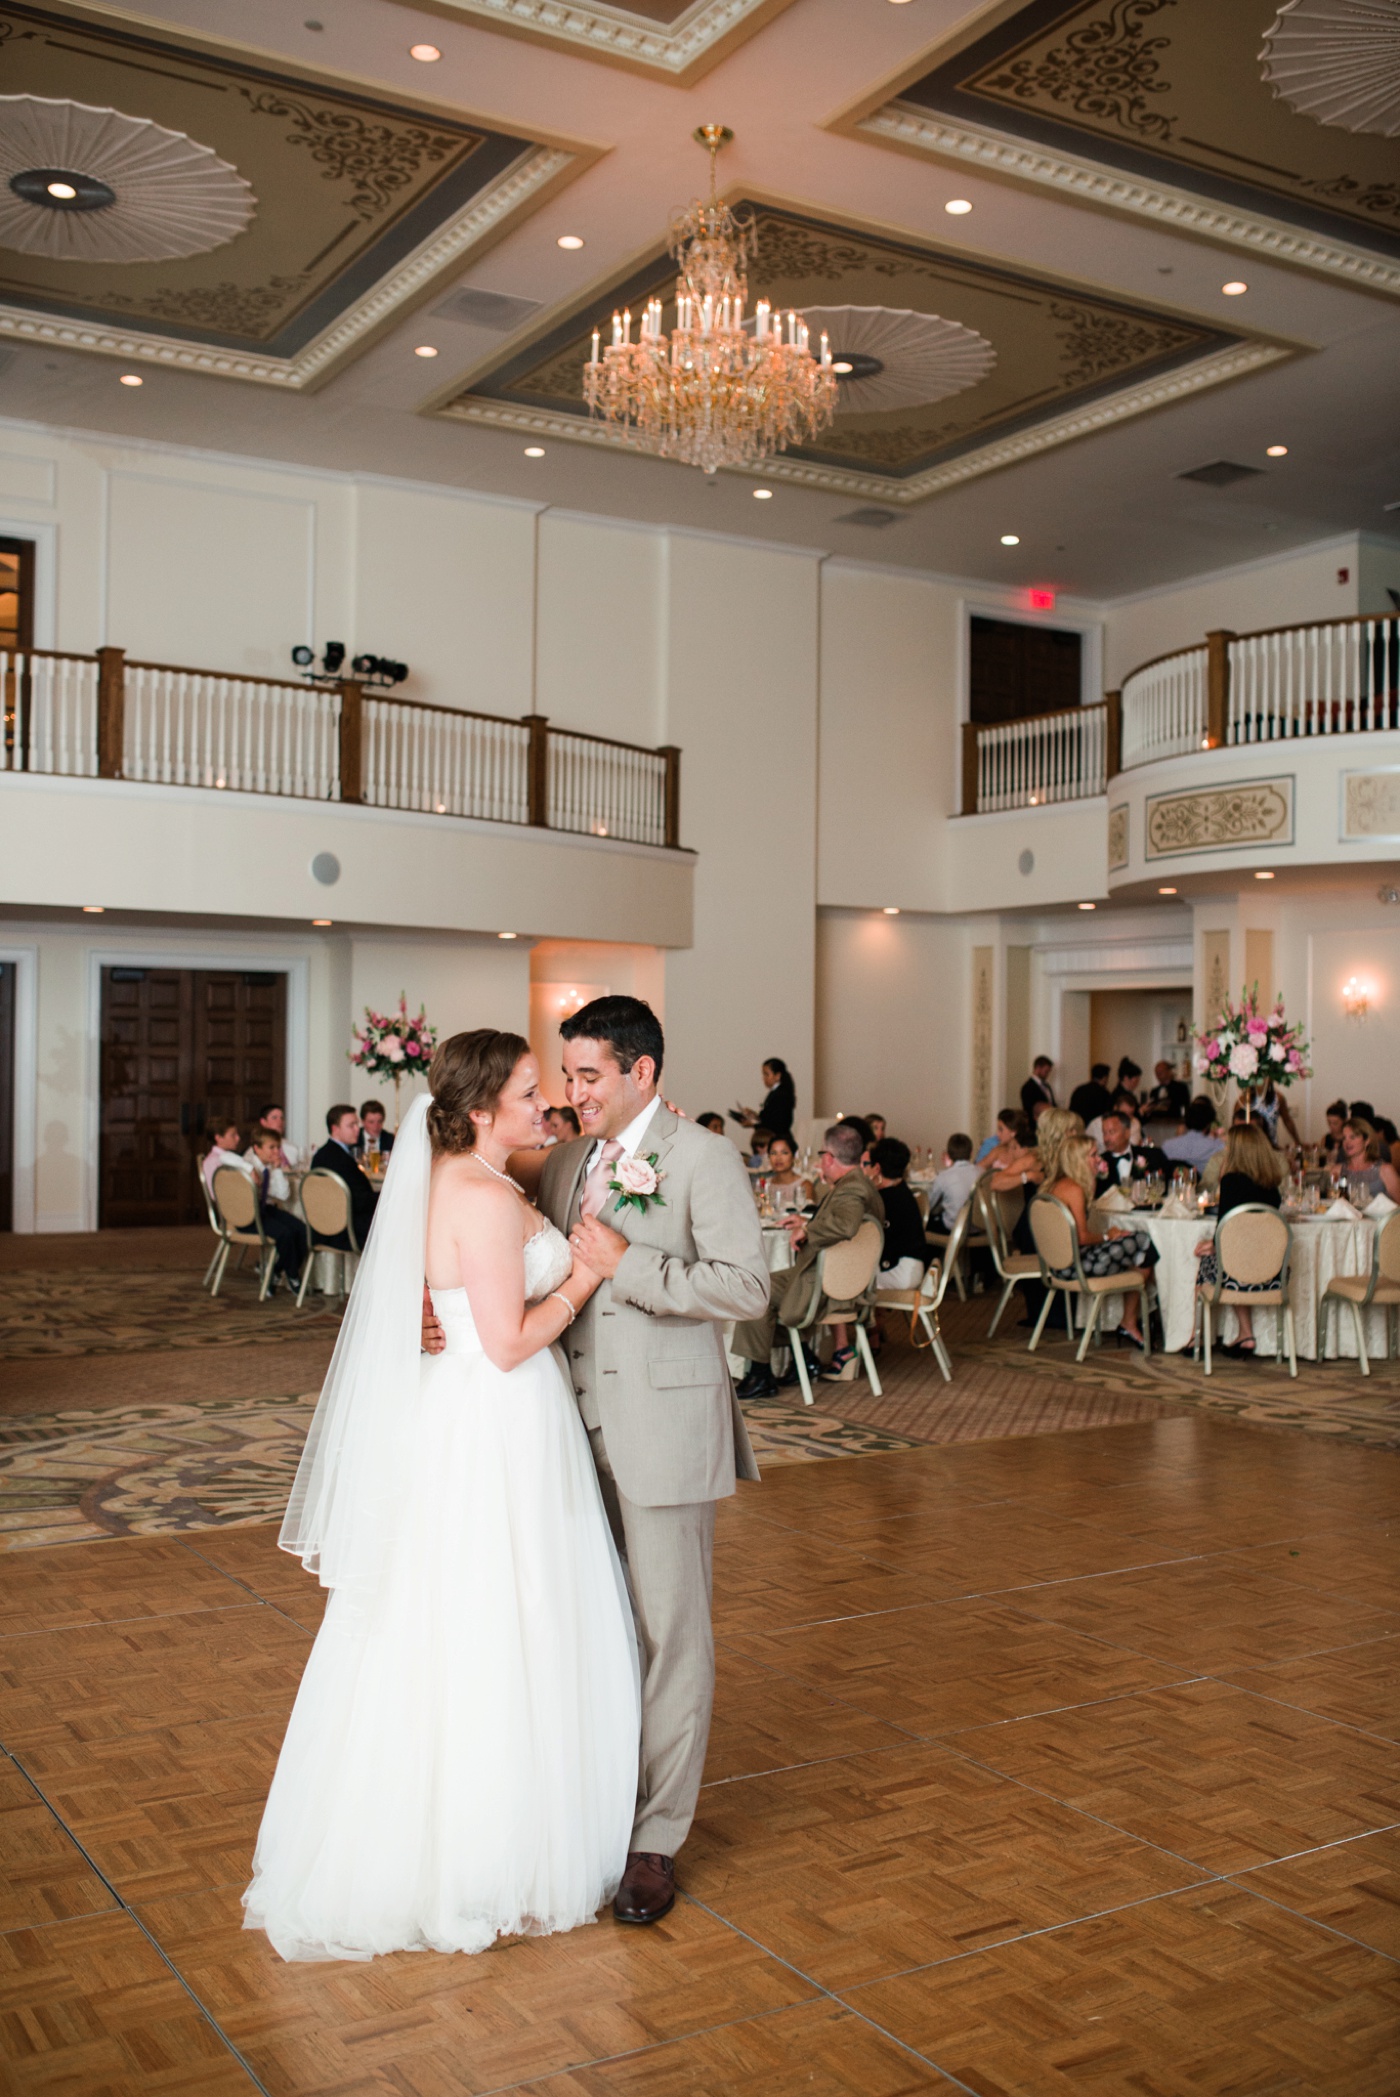 Amanda + Ruben - The Carriage House Wedding - Galloway New Jersey Photographer - Alison Dunn Photography-106